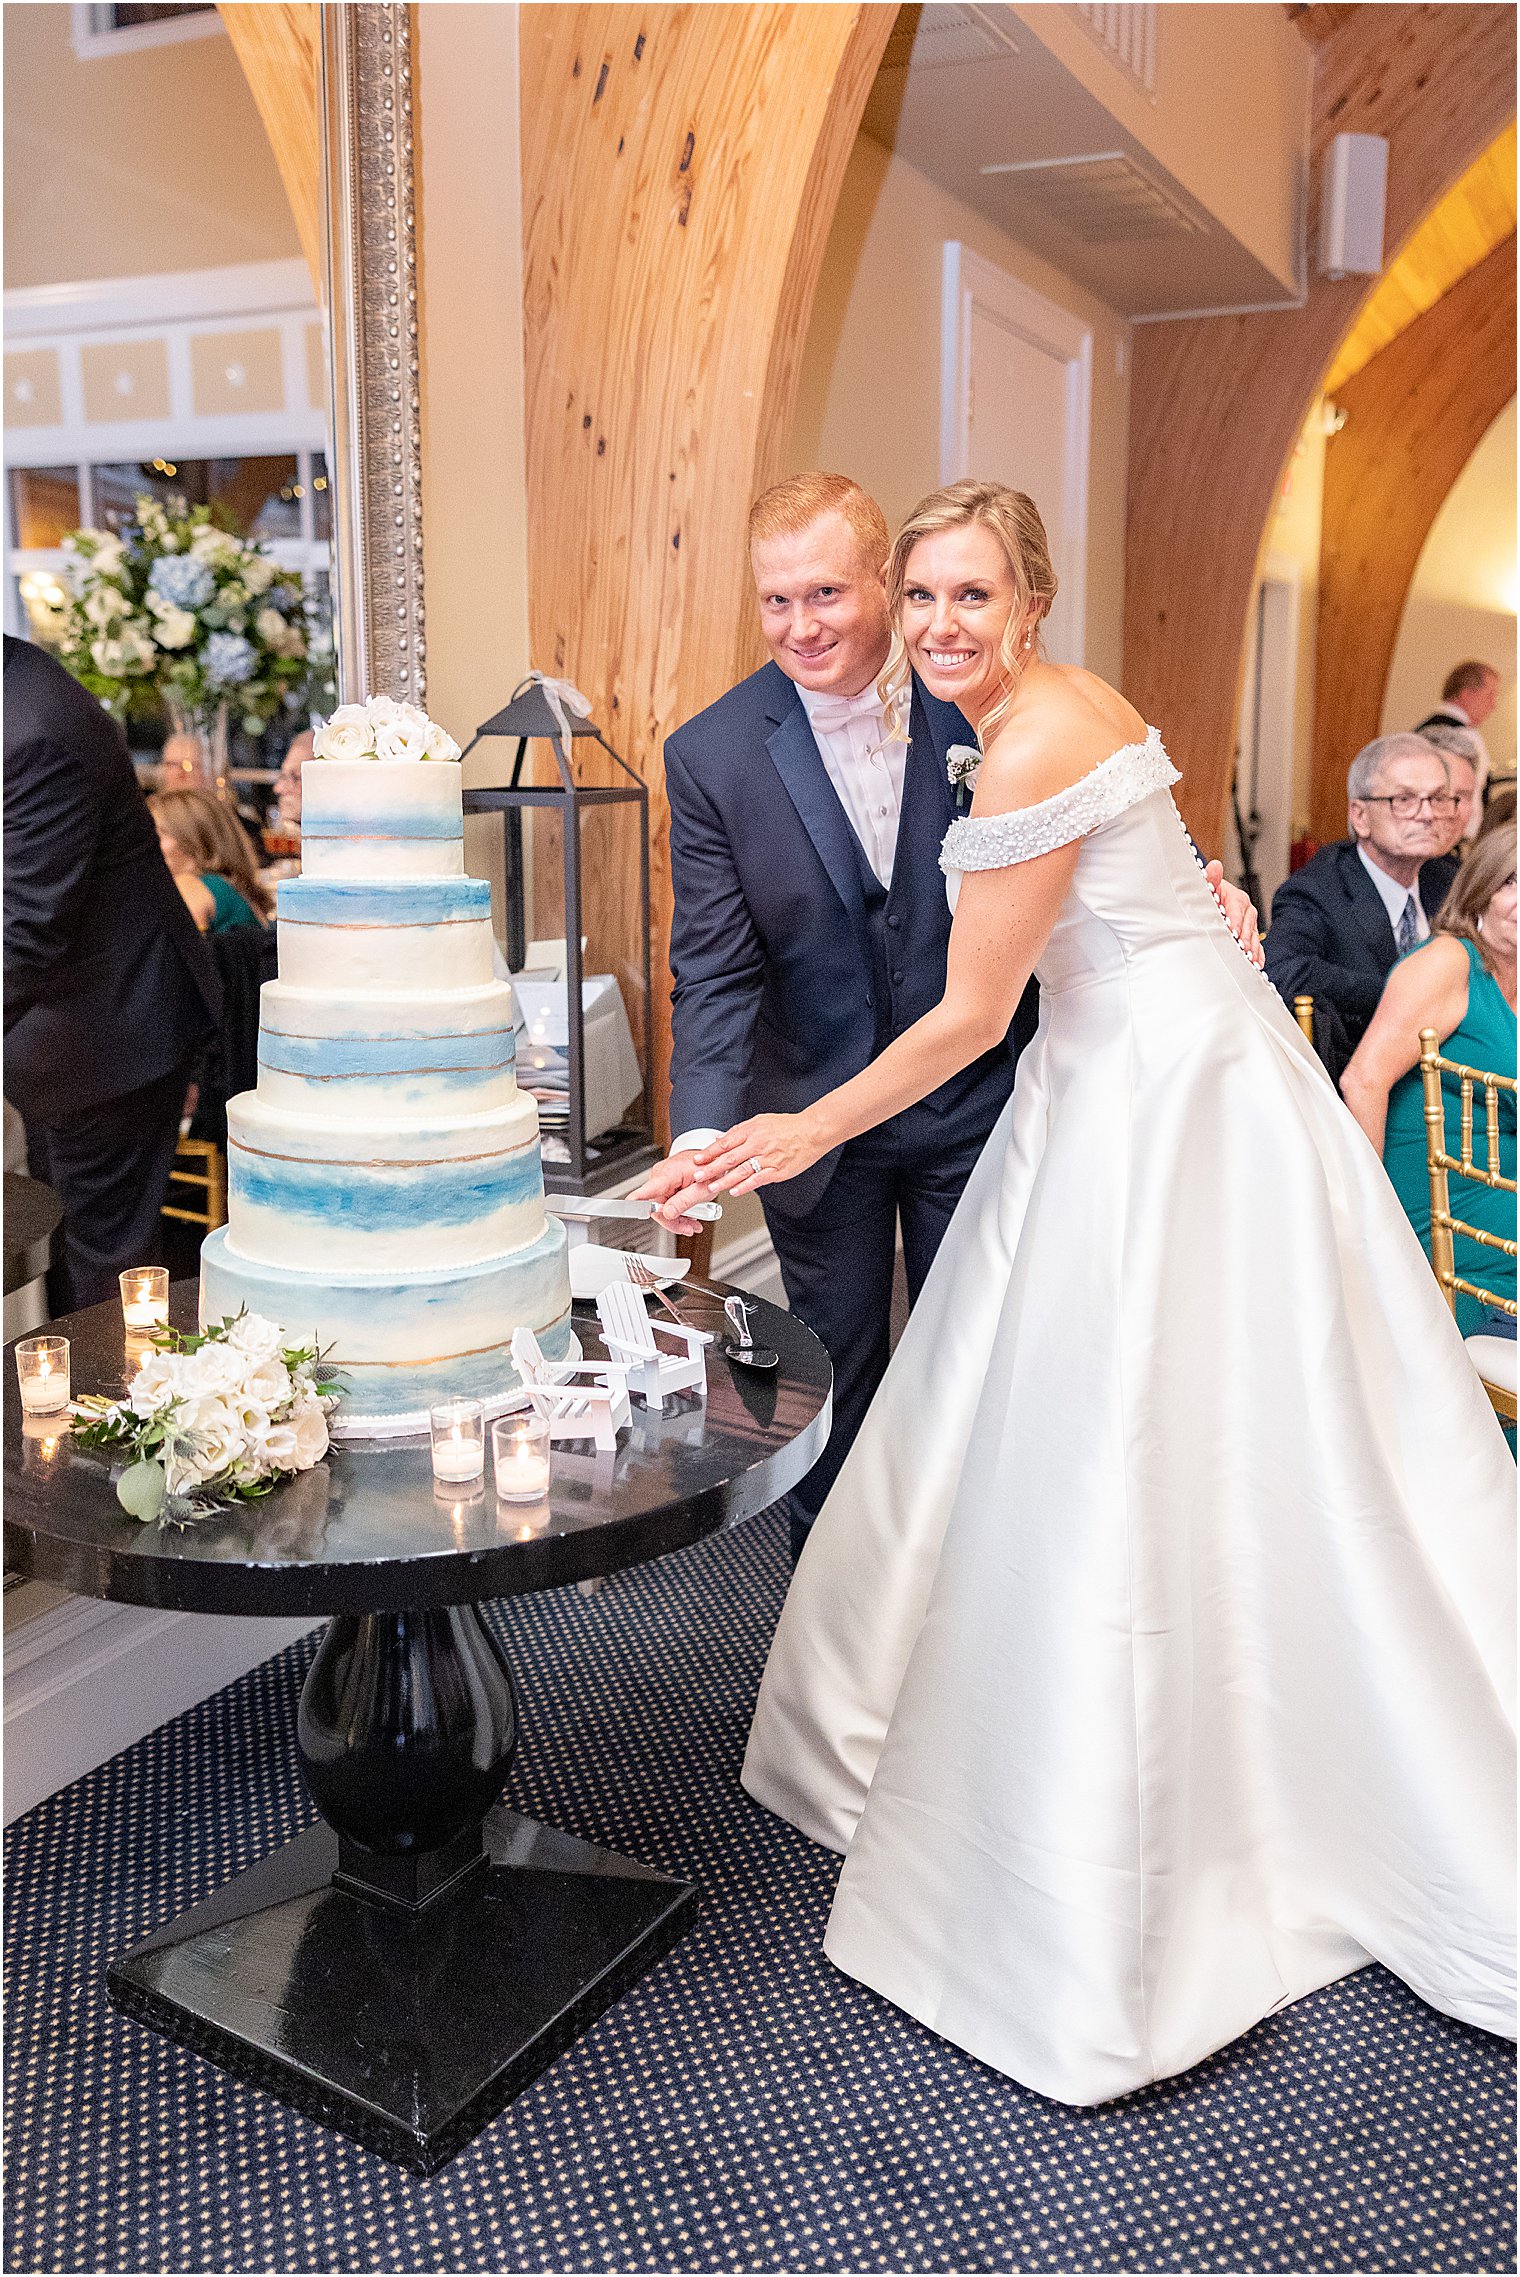 bride and groom cut wedding cake during LBI wedding reception